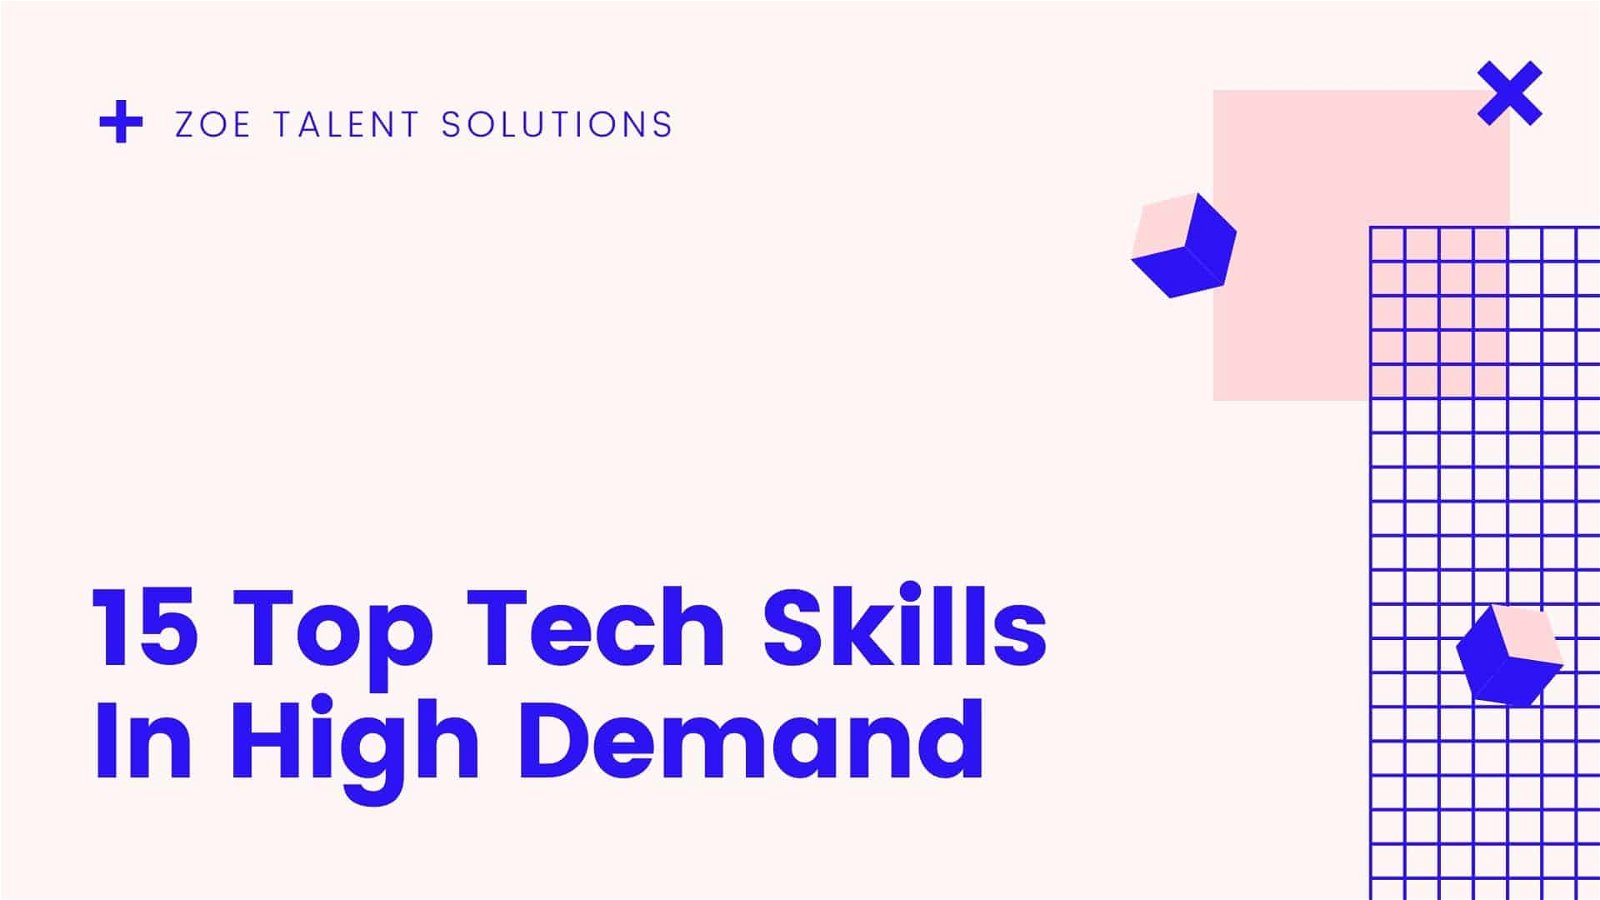 15 Top Tech Skills In High Demand